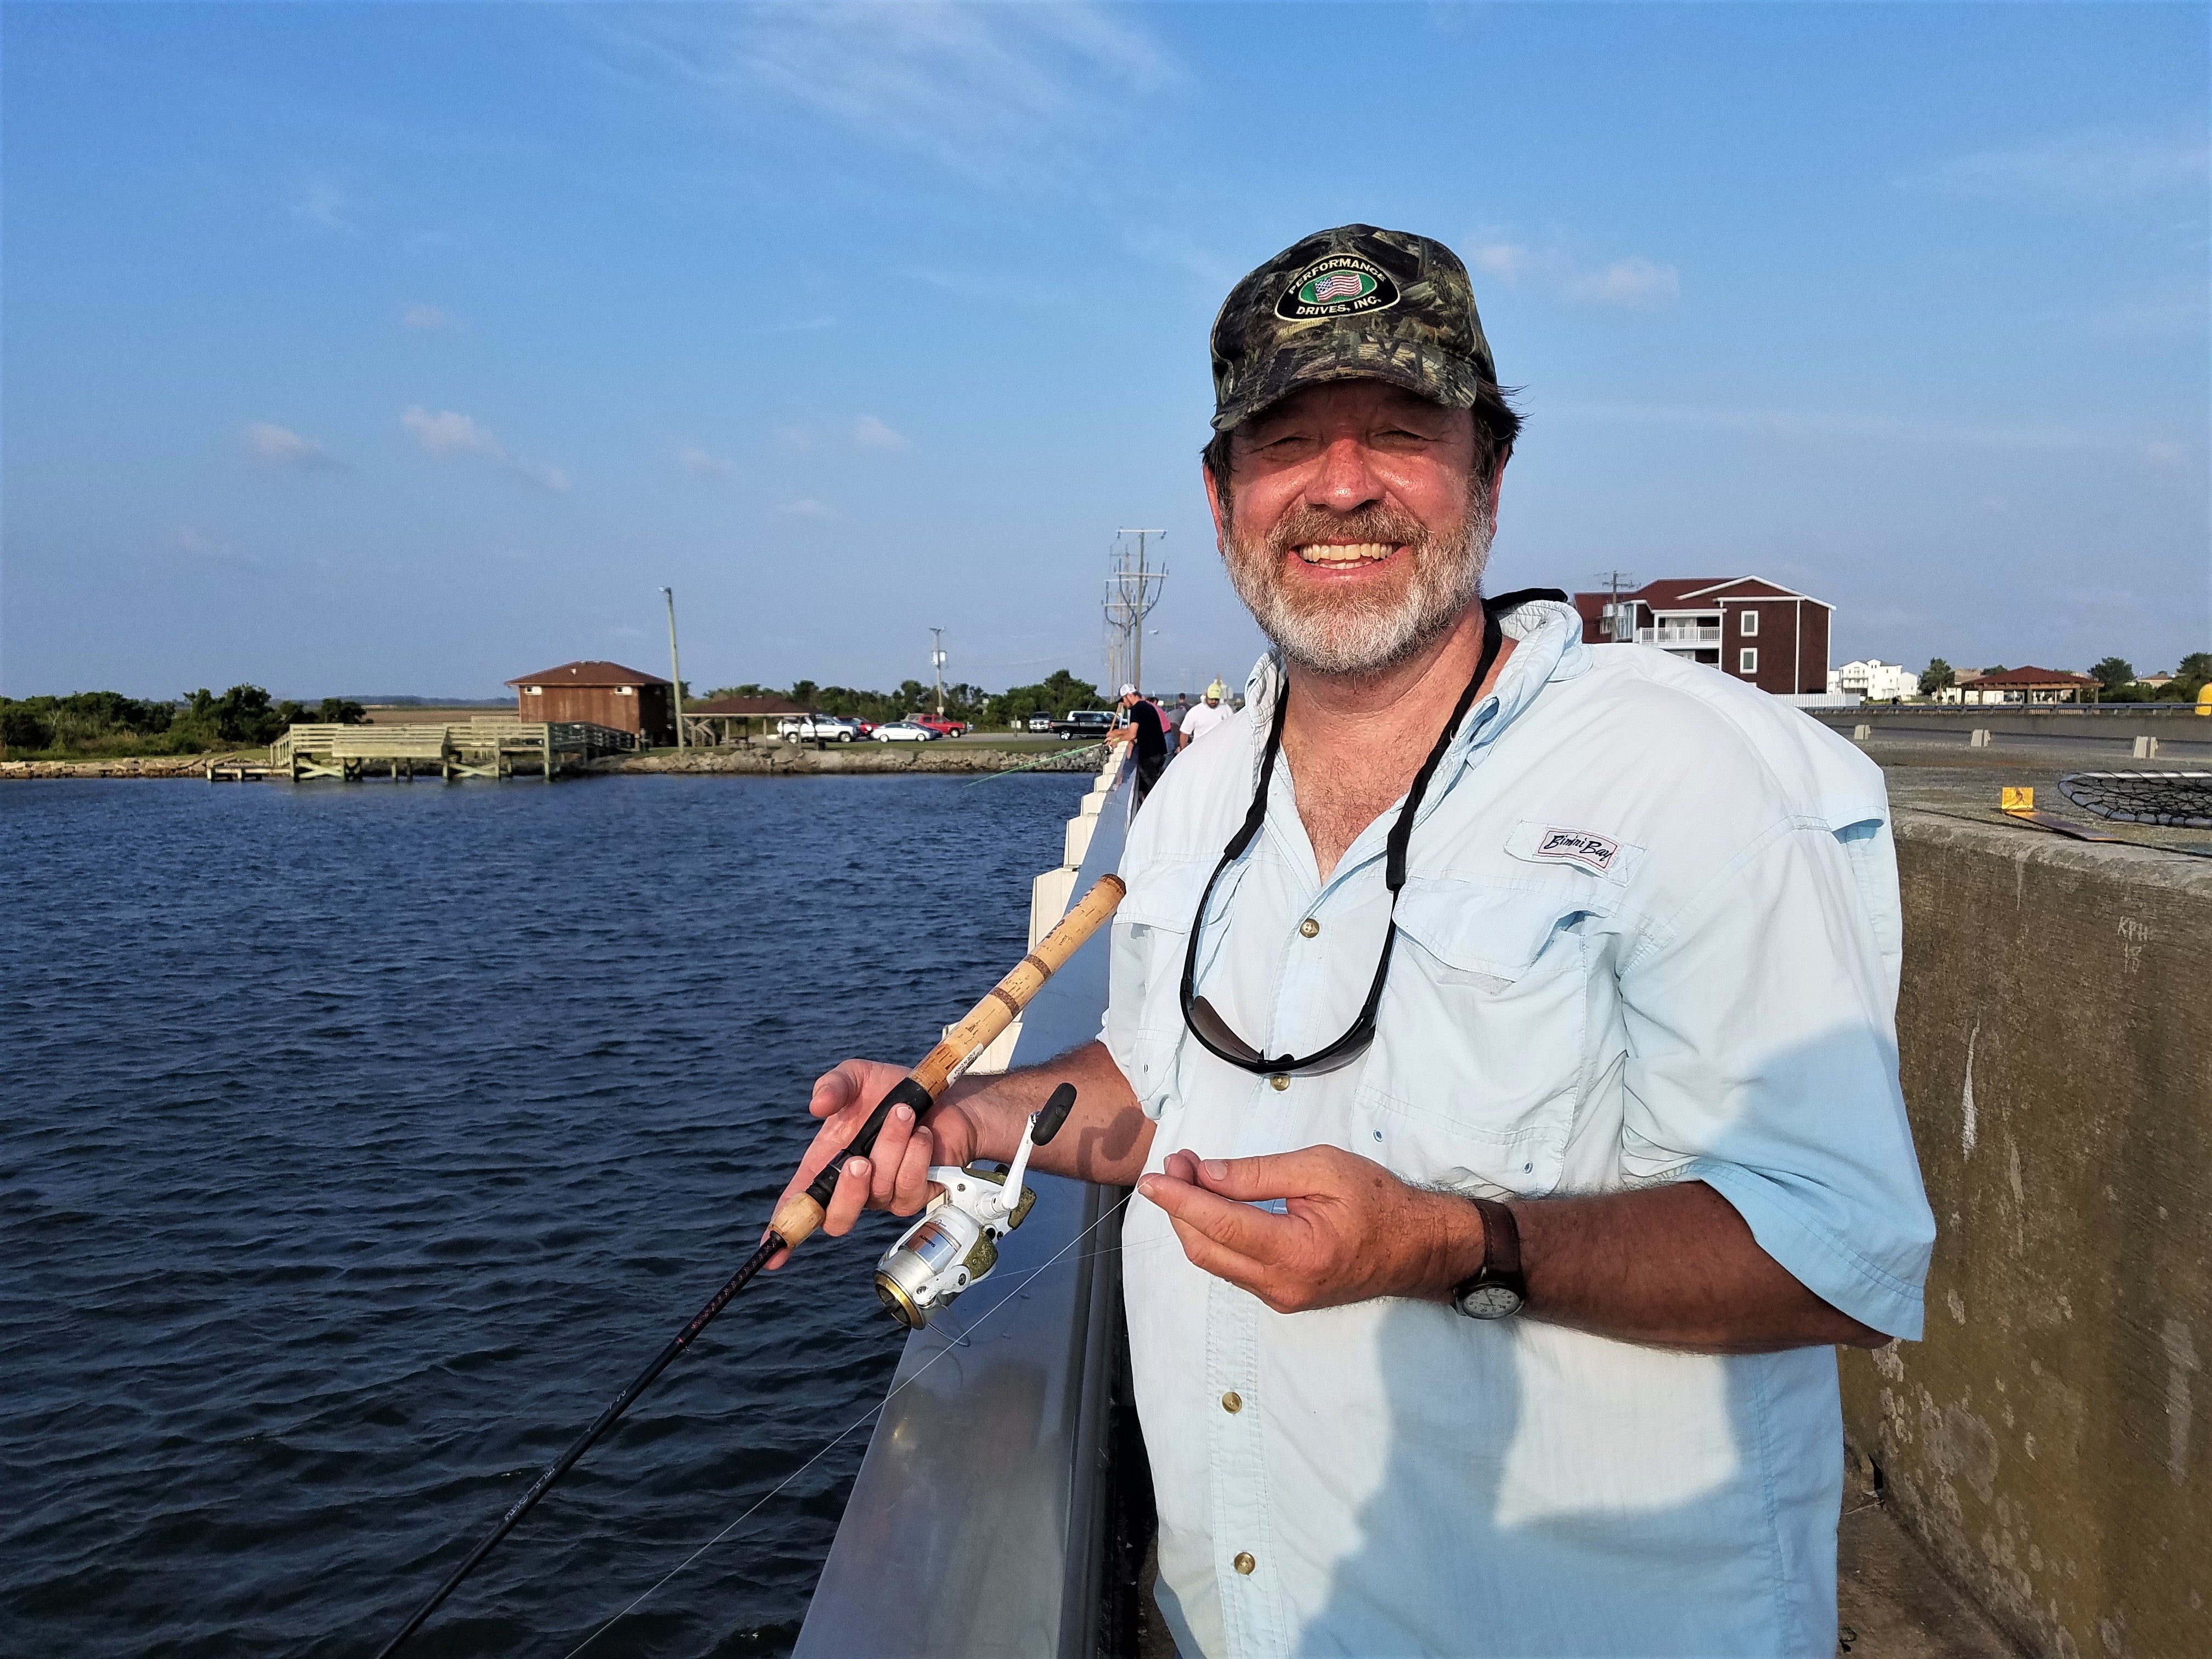 Fishin' Fun: Slow, steady retrieve key for trout - The Coastland Times